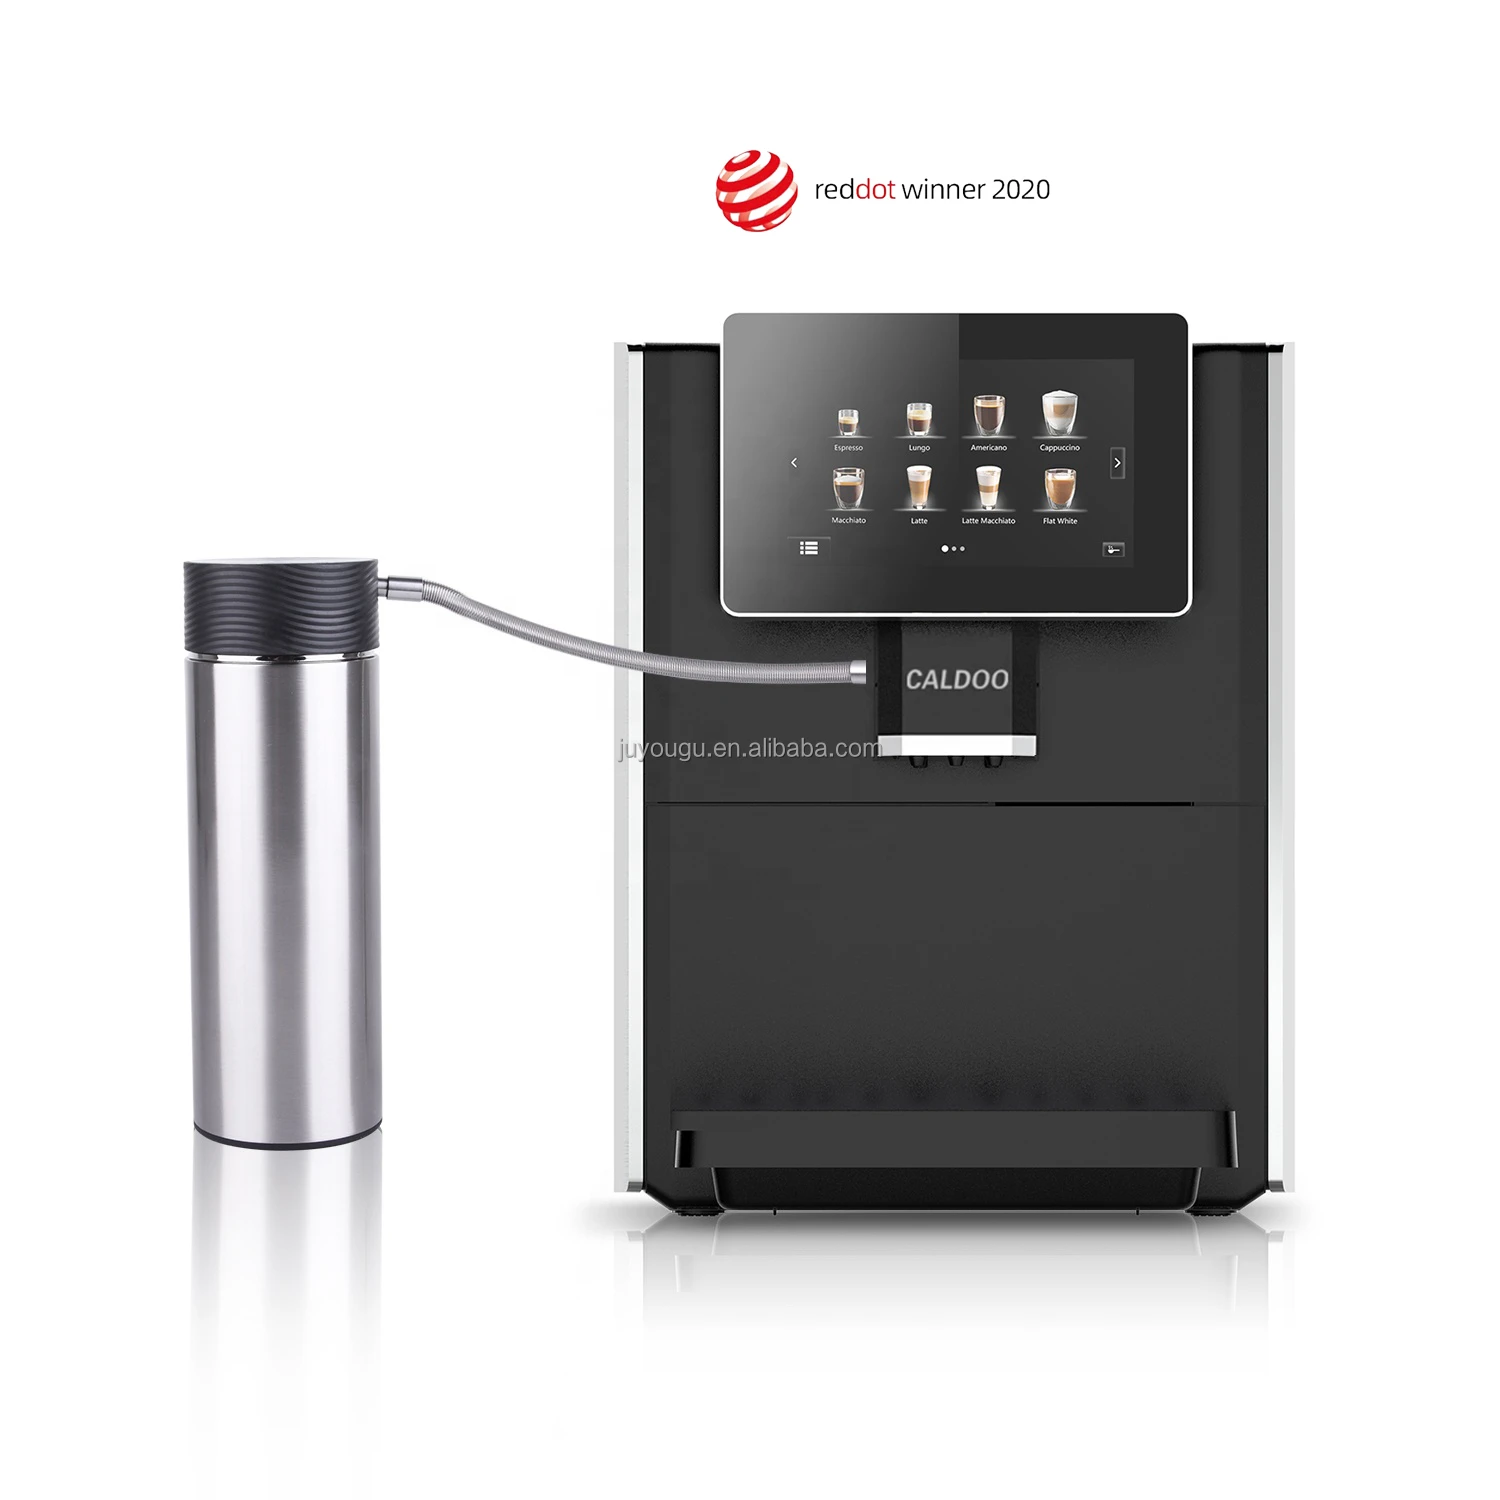 Hipresso Super-automatic Espresso Coffee Machine with Large 7